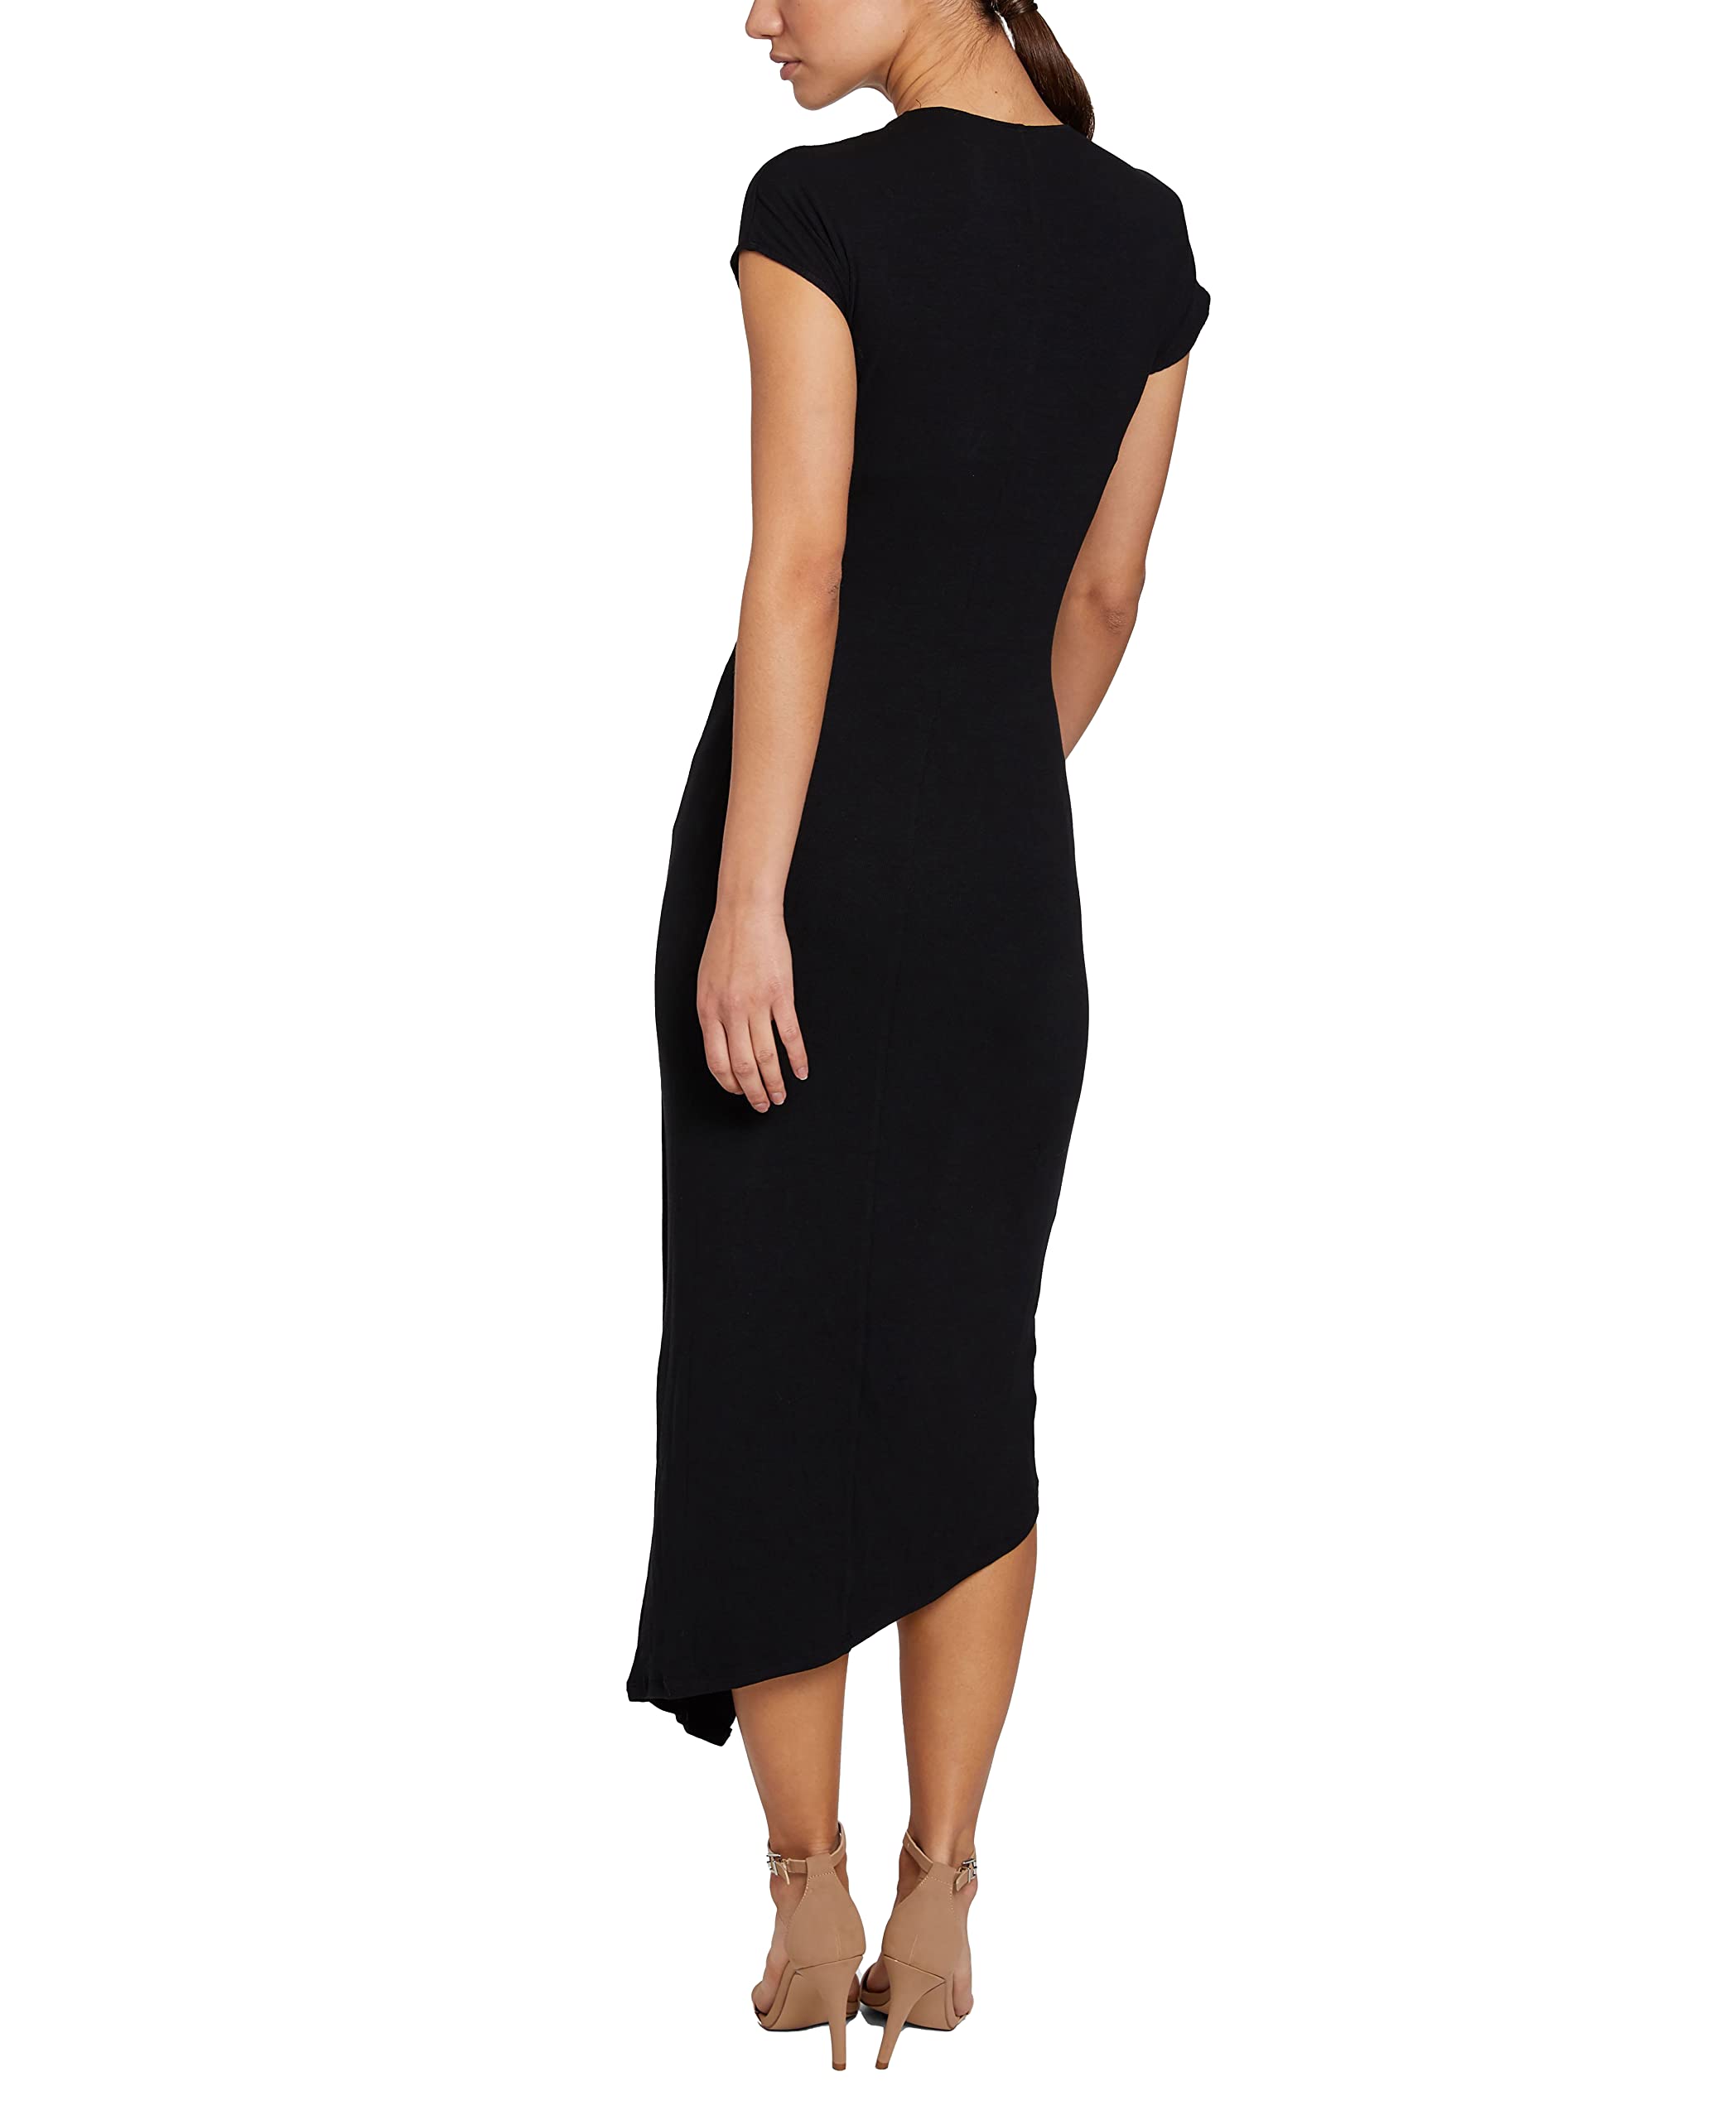 LAUNDRY BY SHELLI SEGAL Women's Midi Cap Sleeve Asymmetrical Knot Front Dresses